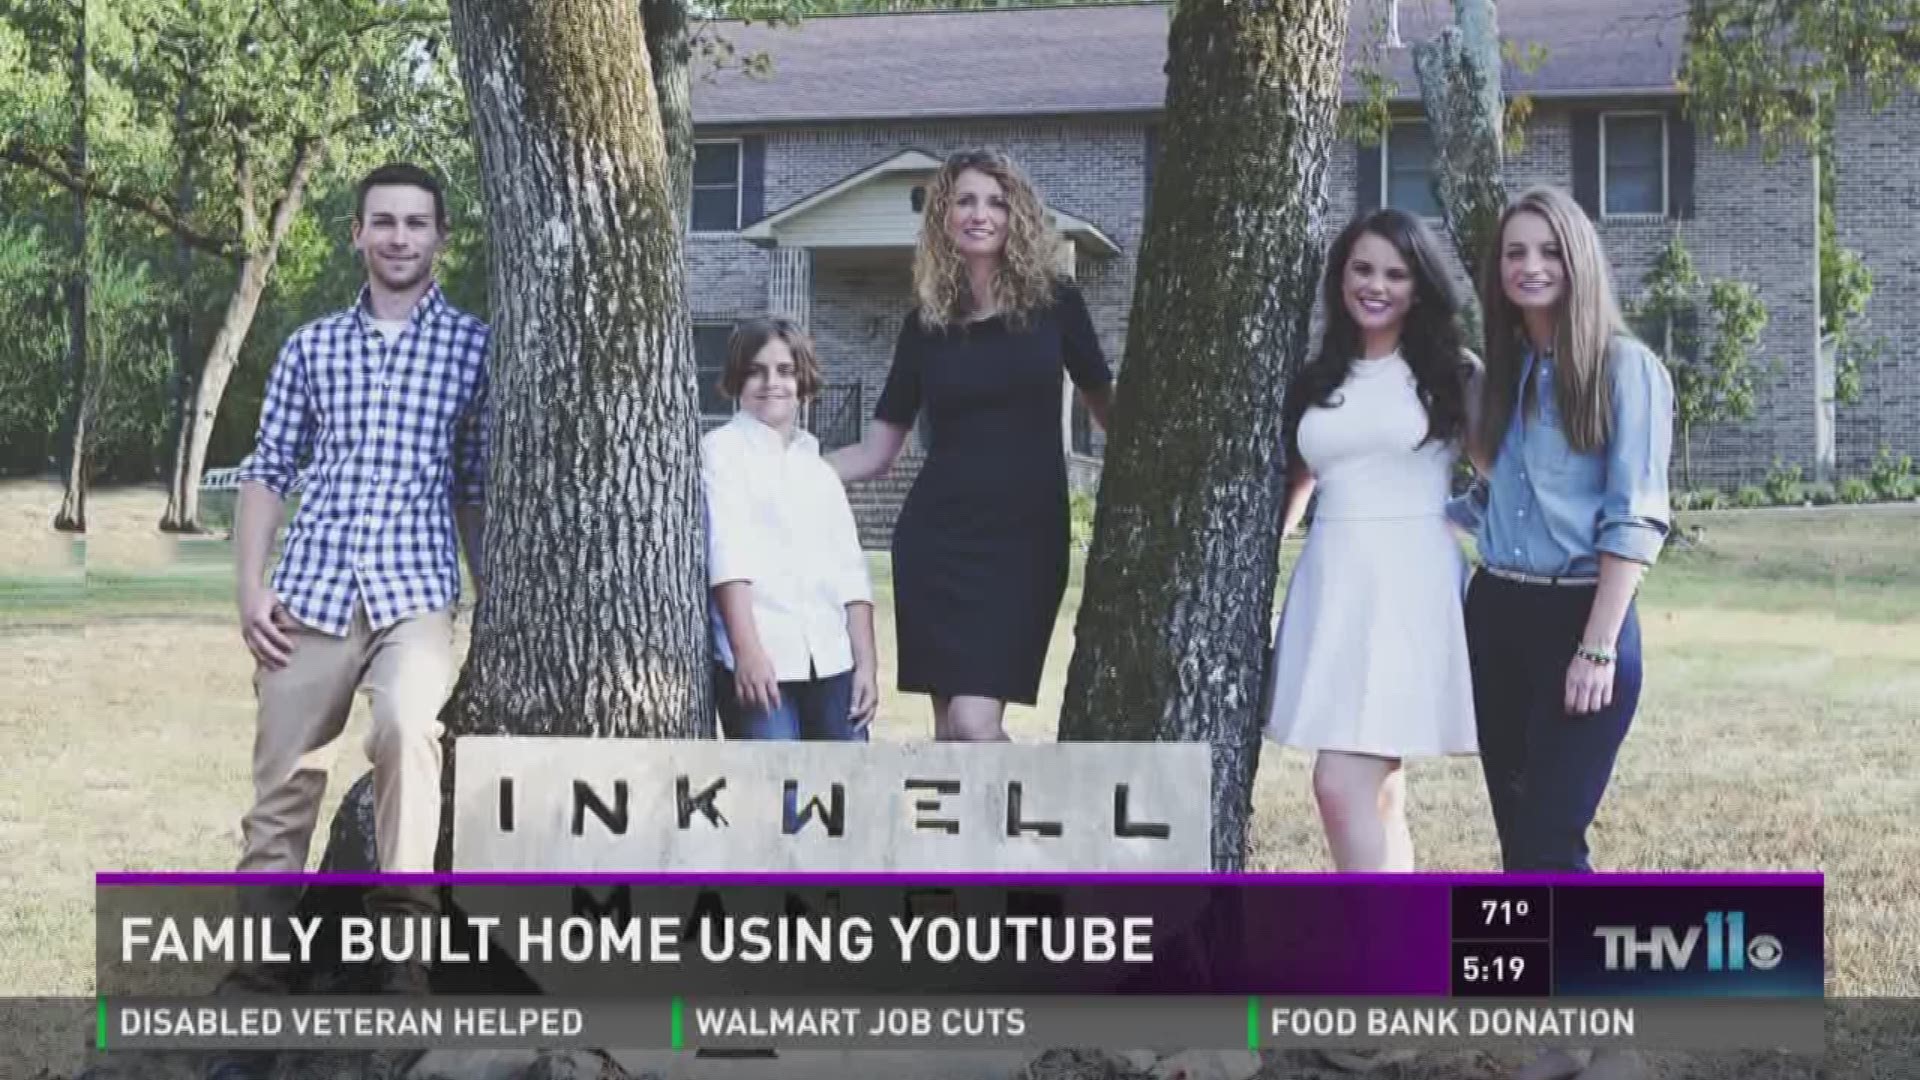 Family built home using YouTube